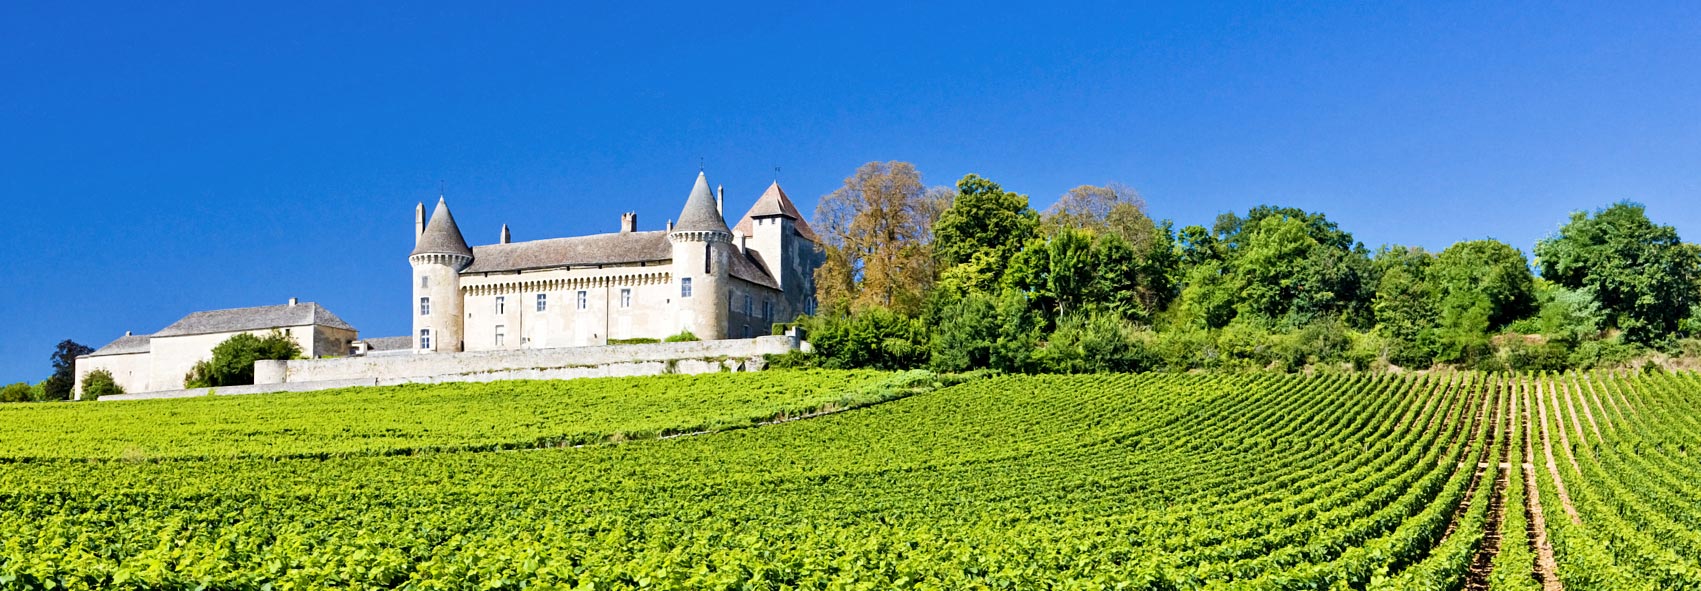 Burgund - Chteau de Rully